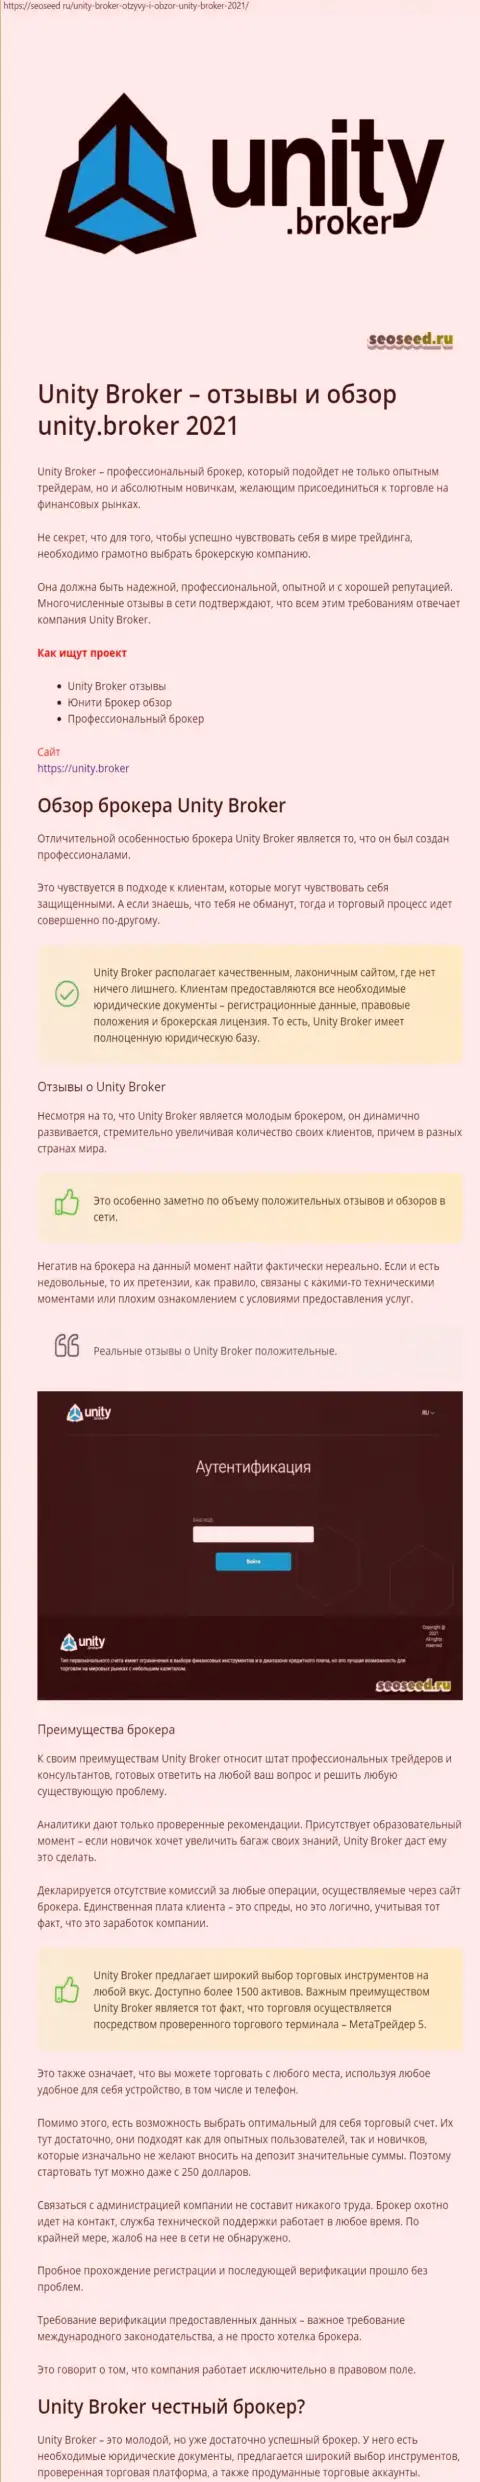 Материал об ФОРЕКС компании Unity Broker на web-ресурсе сеосид ру